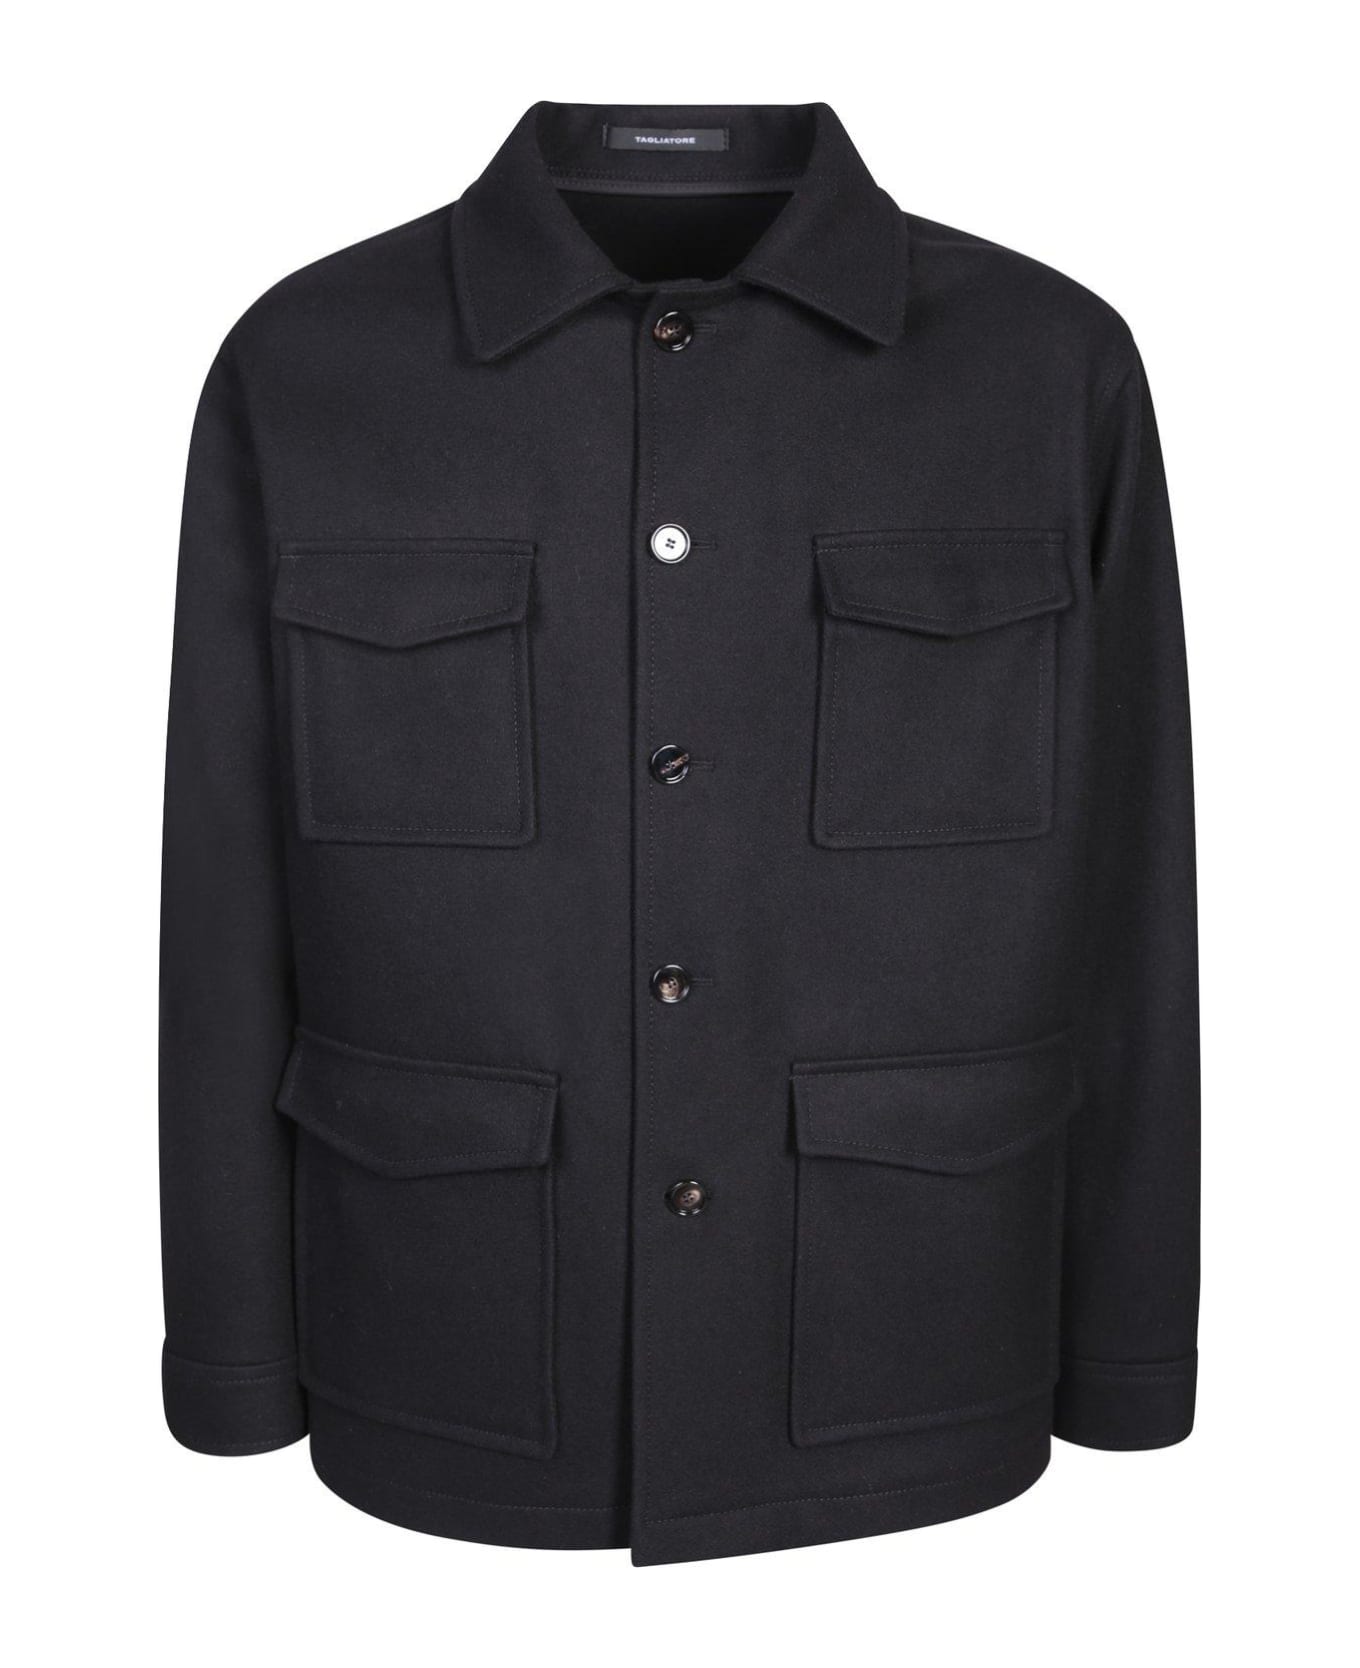 Tagliatore Spread-collared Buttoned Shirt Jacket - Black